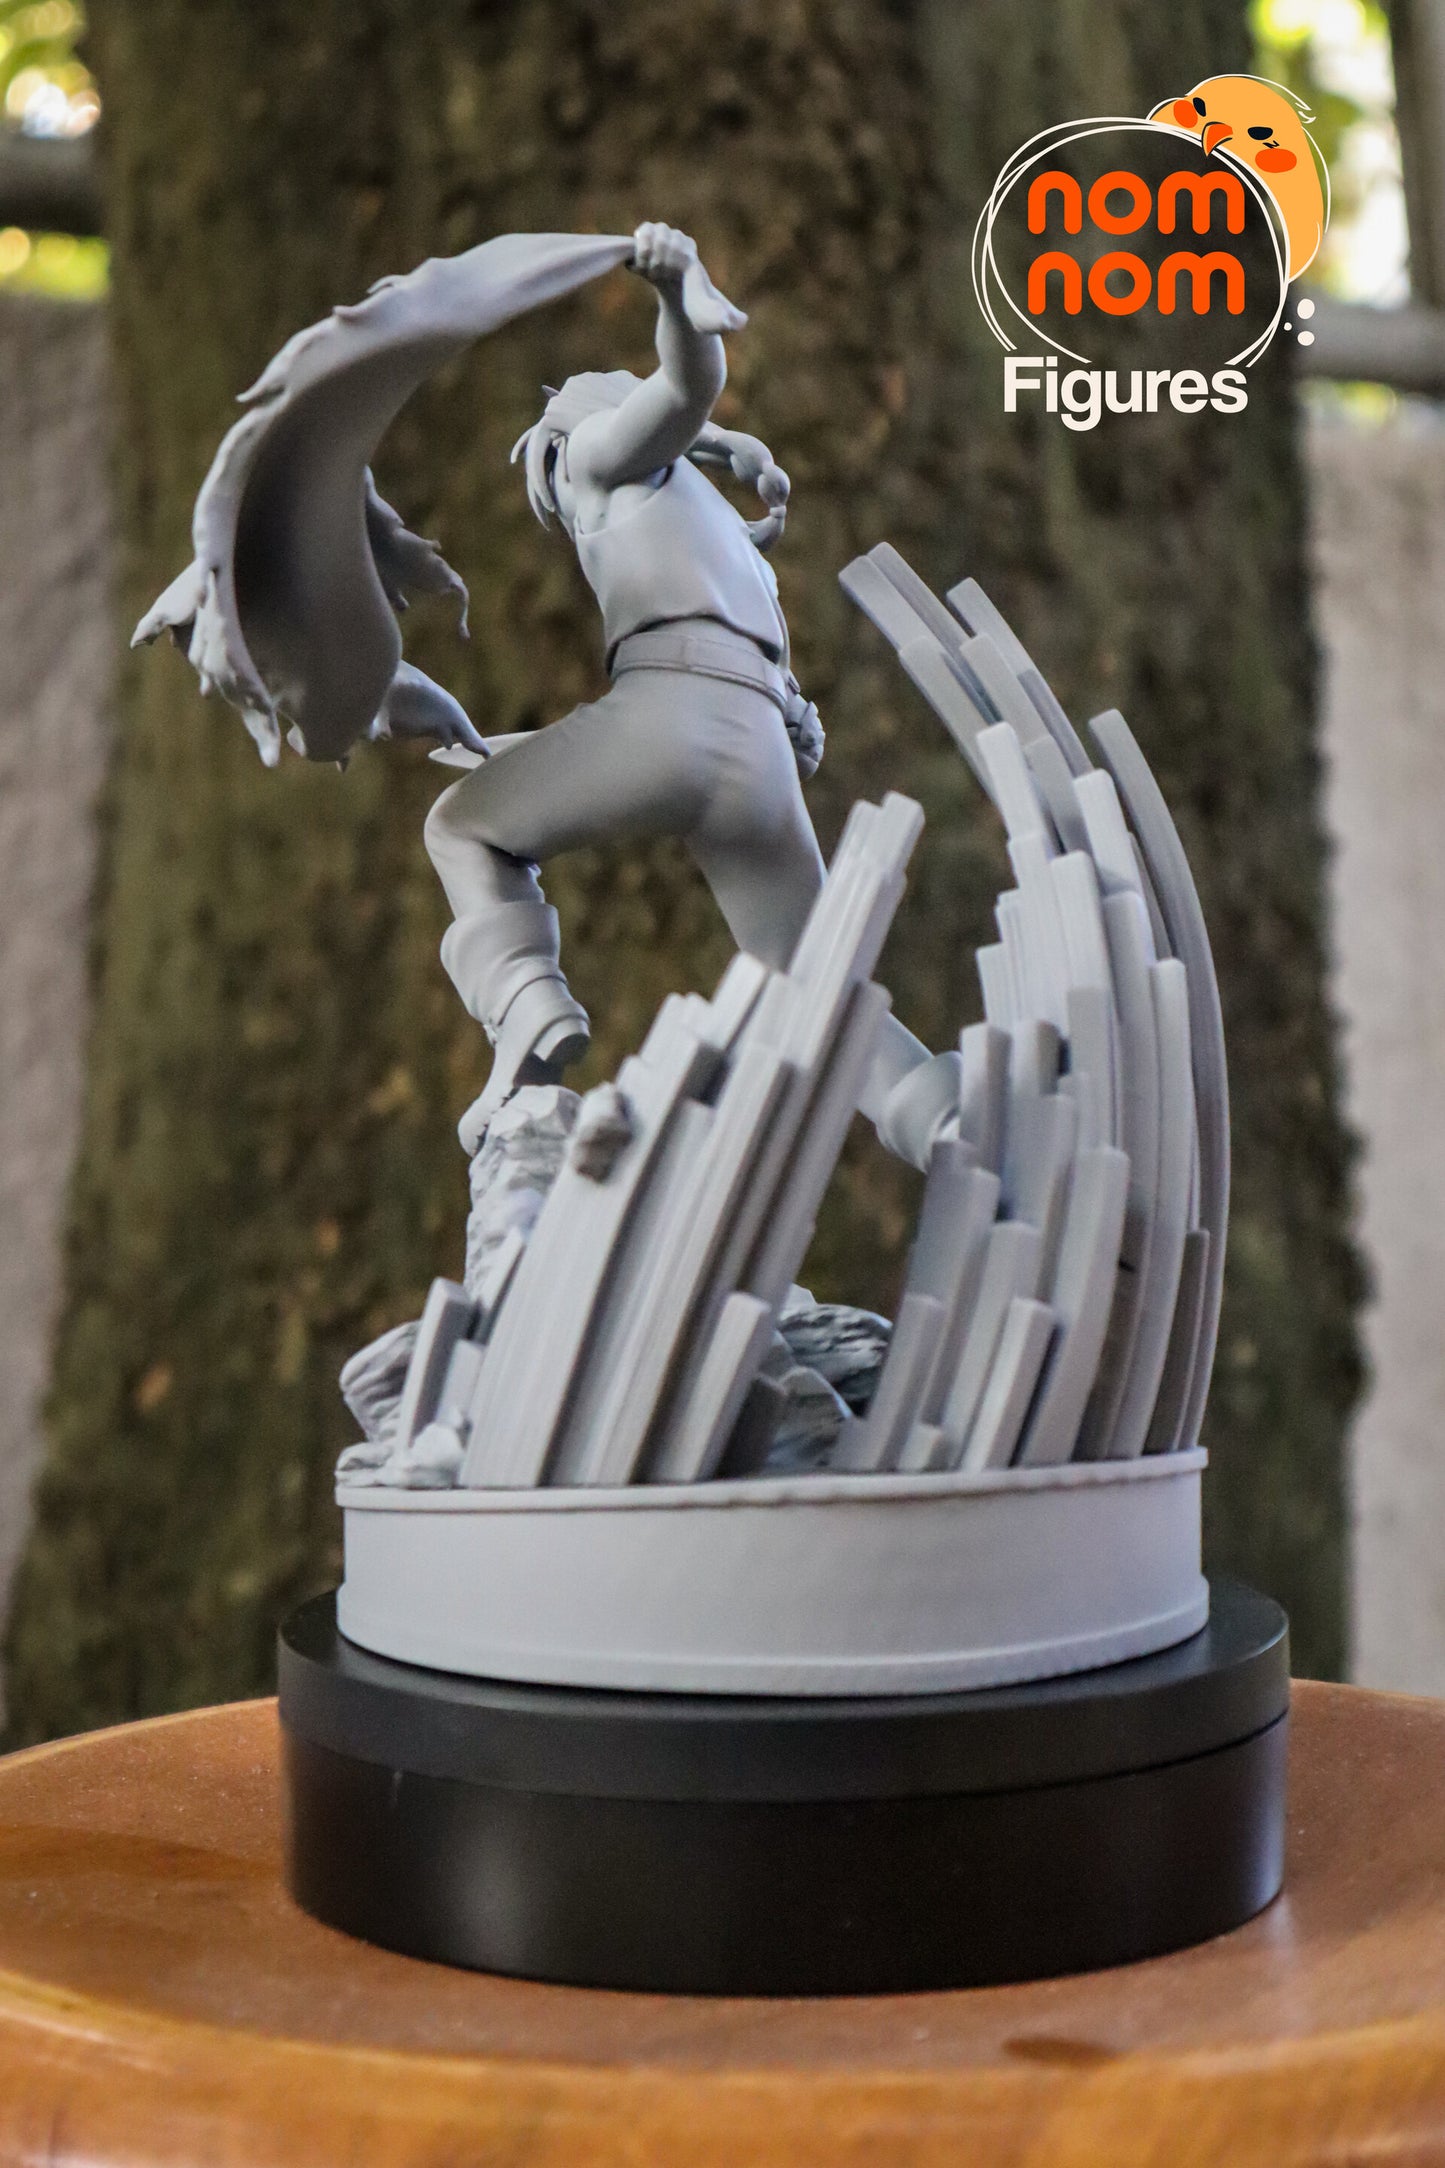 Edward Elric - Full Metal Alchemist Printed Model by Nomnom Figures